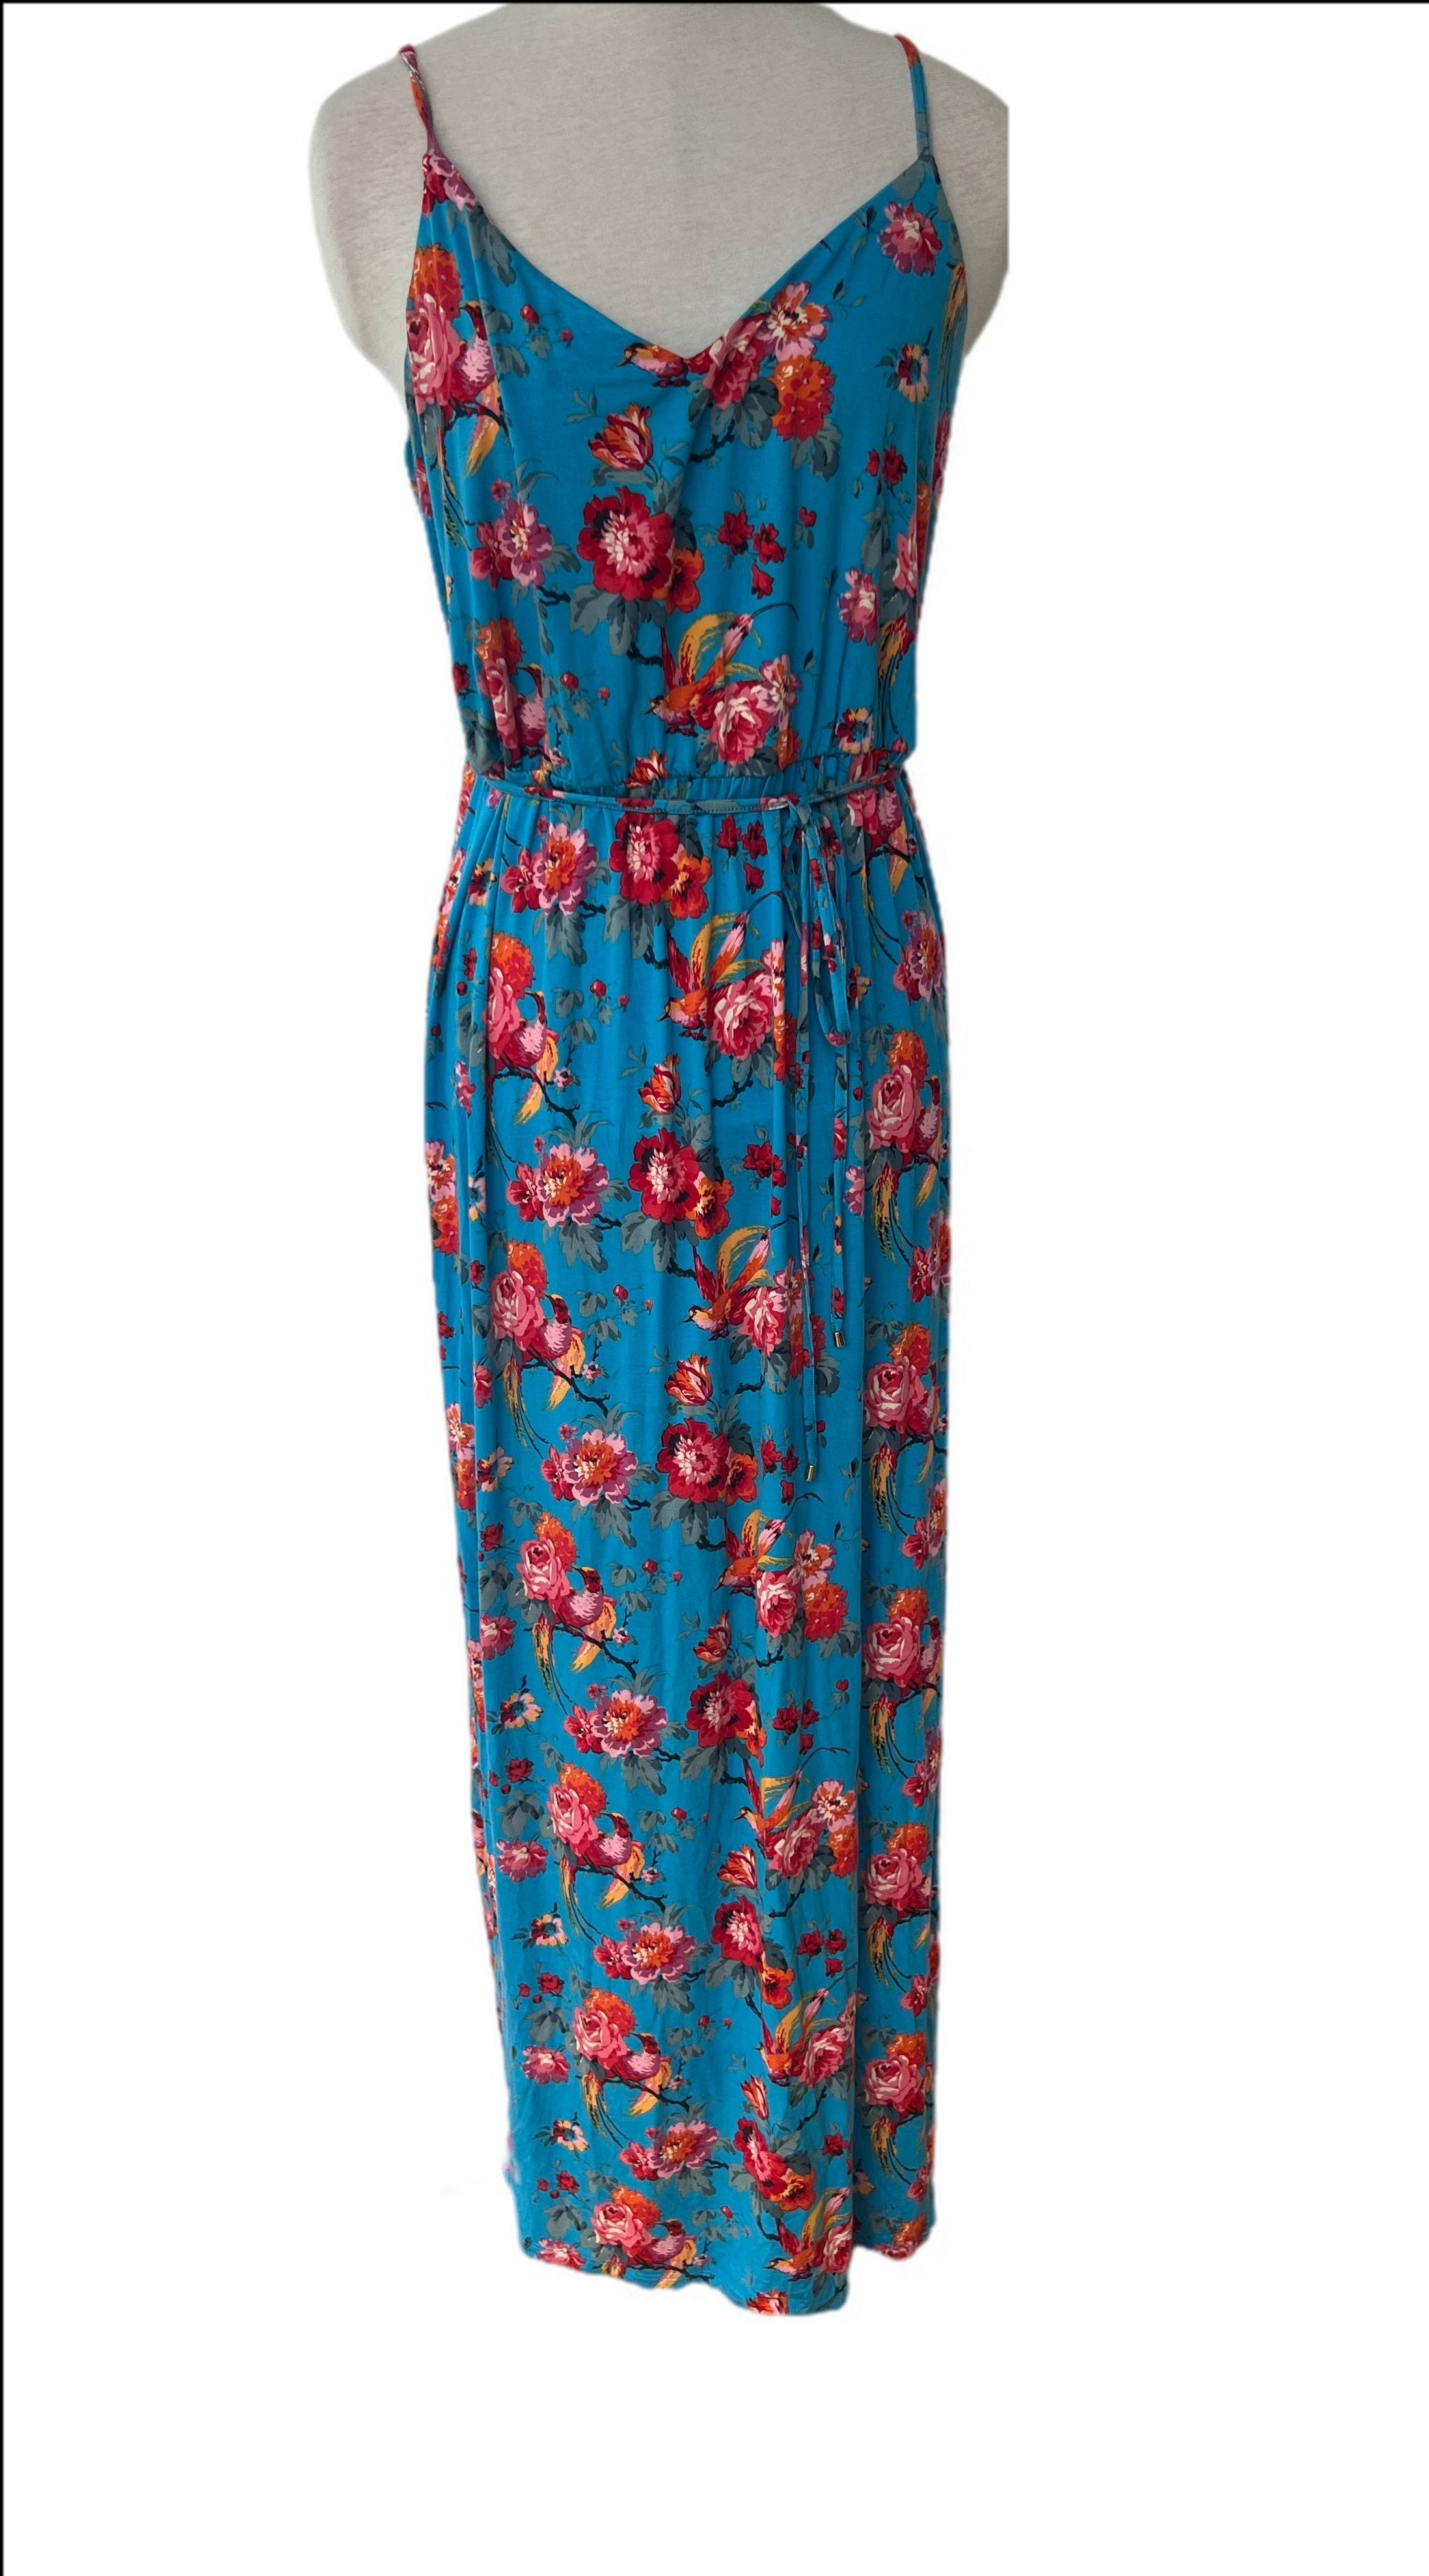 Floral Sun Dress with side slit and belt